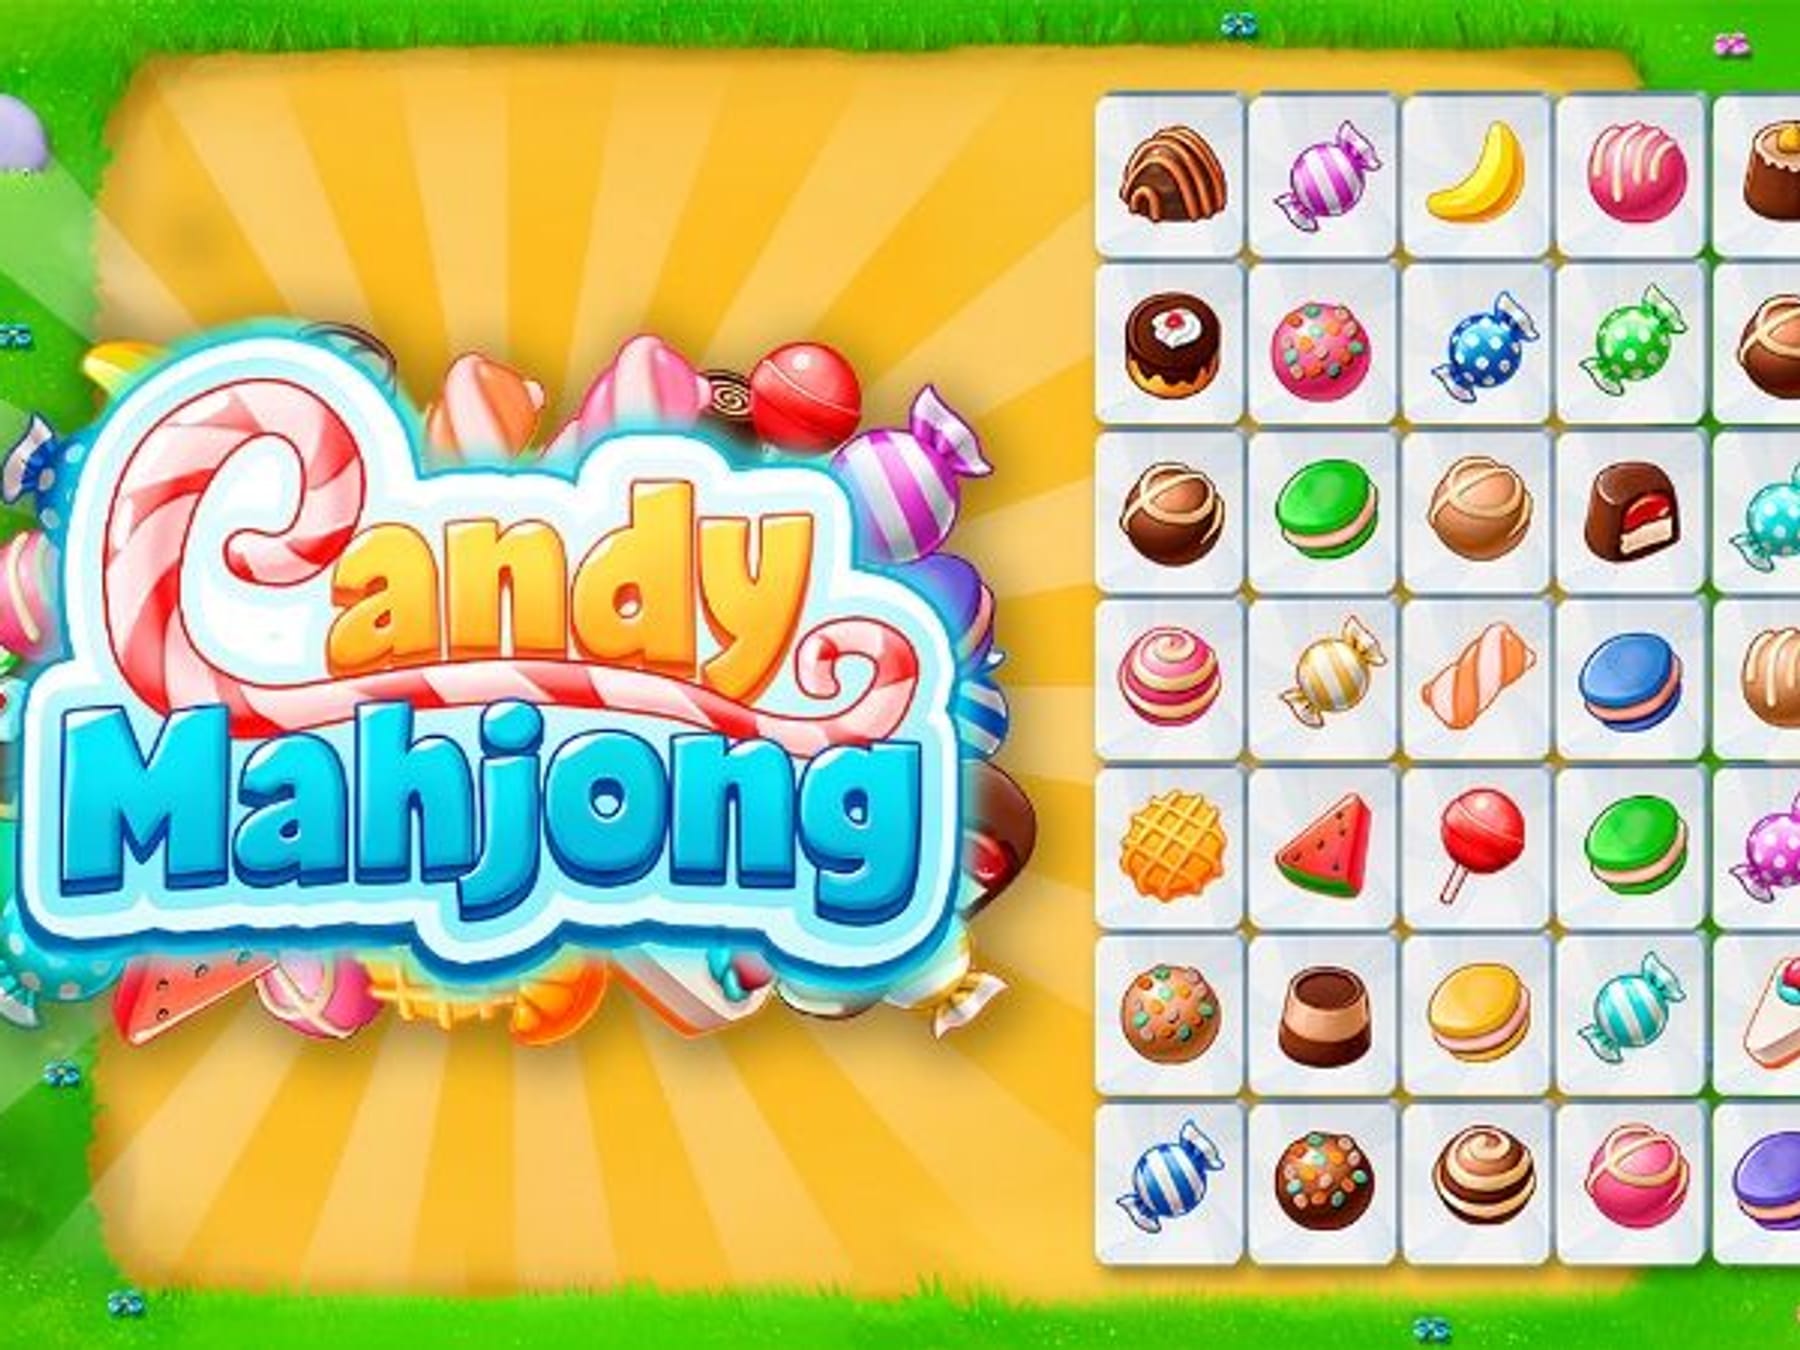 Candy Mahjong kostenlos online spielen bei t-online.de